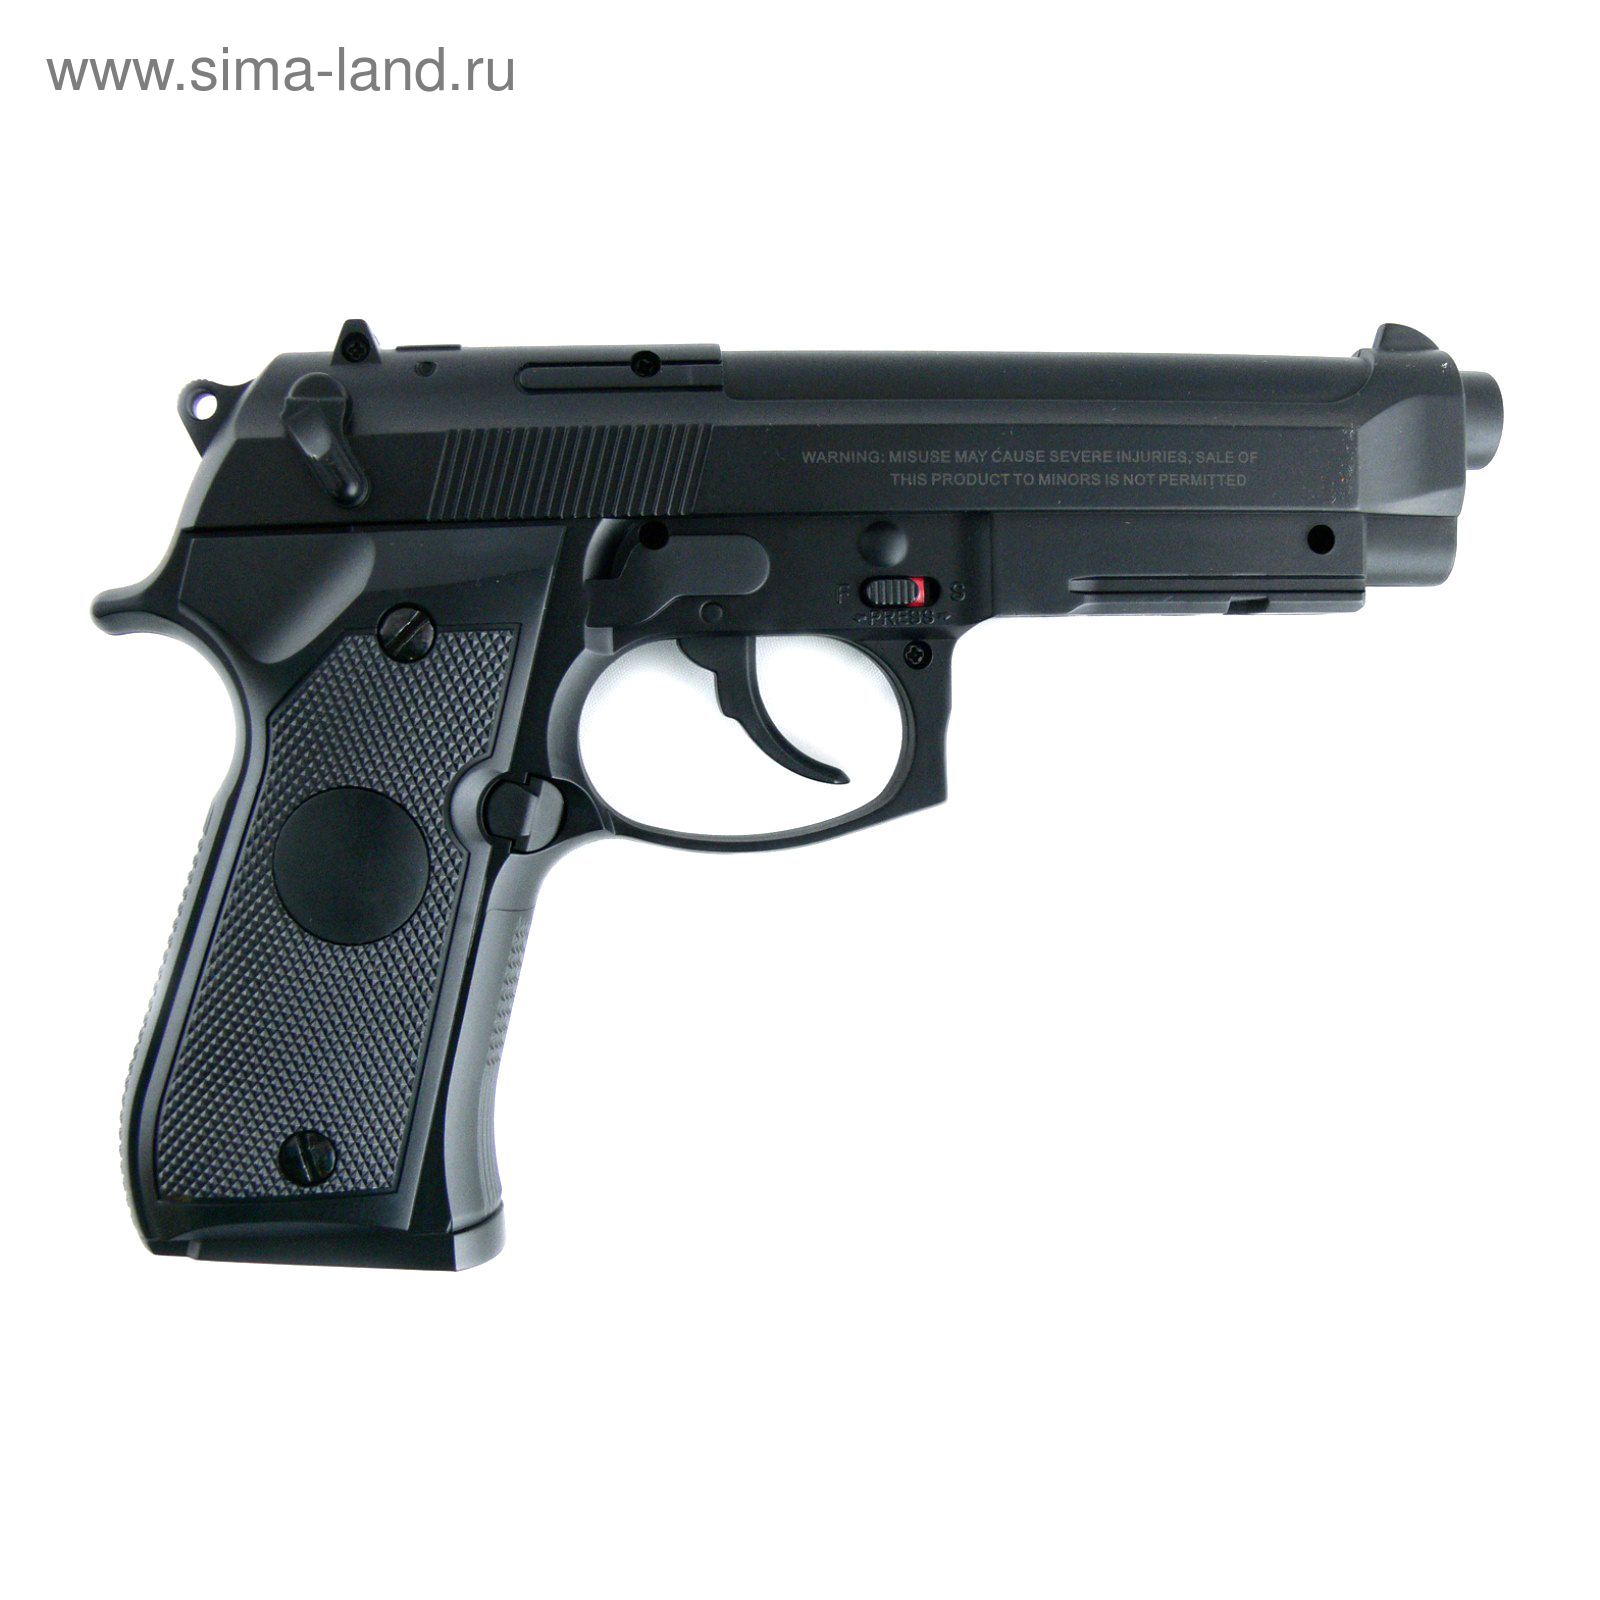 Пистолет пневм. Stalker S92PL (аналог "Beretta 92") к.4,5мм, пластик, 120 м/с, черный, +250шар., кар